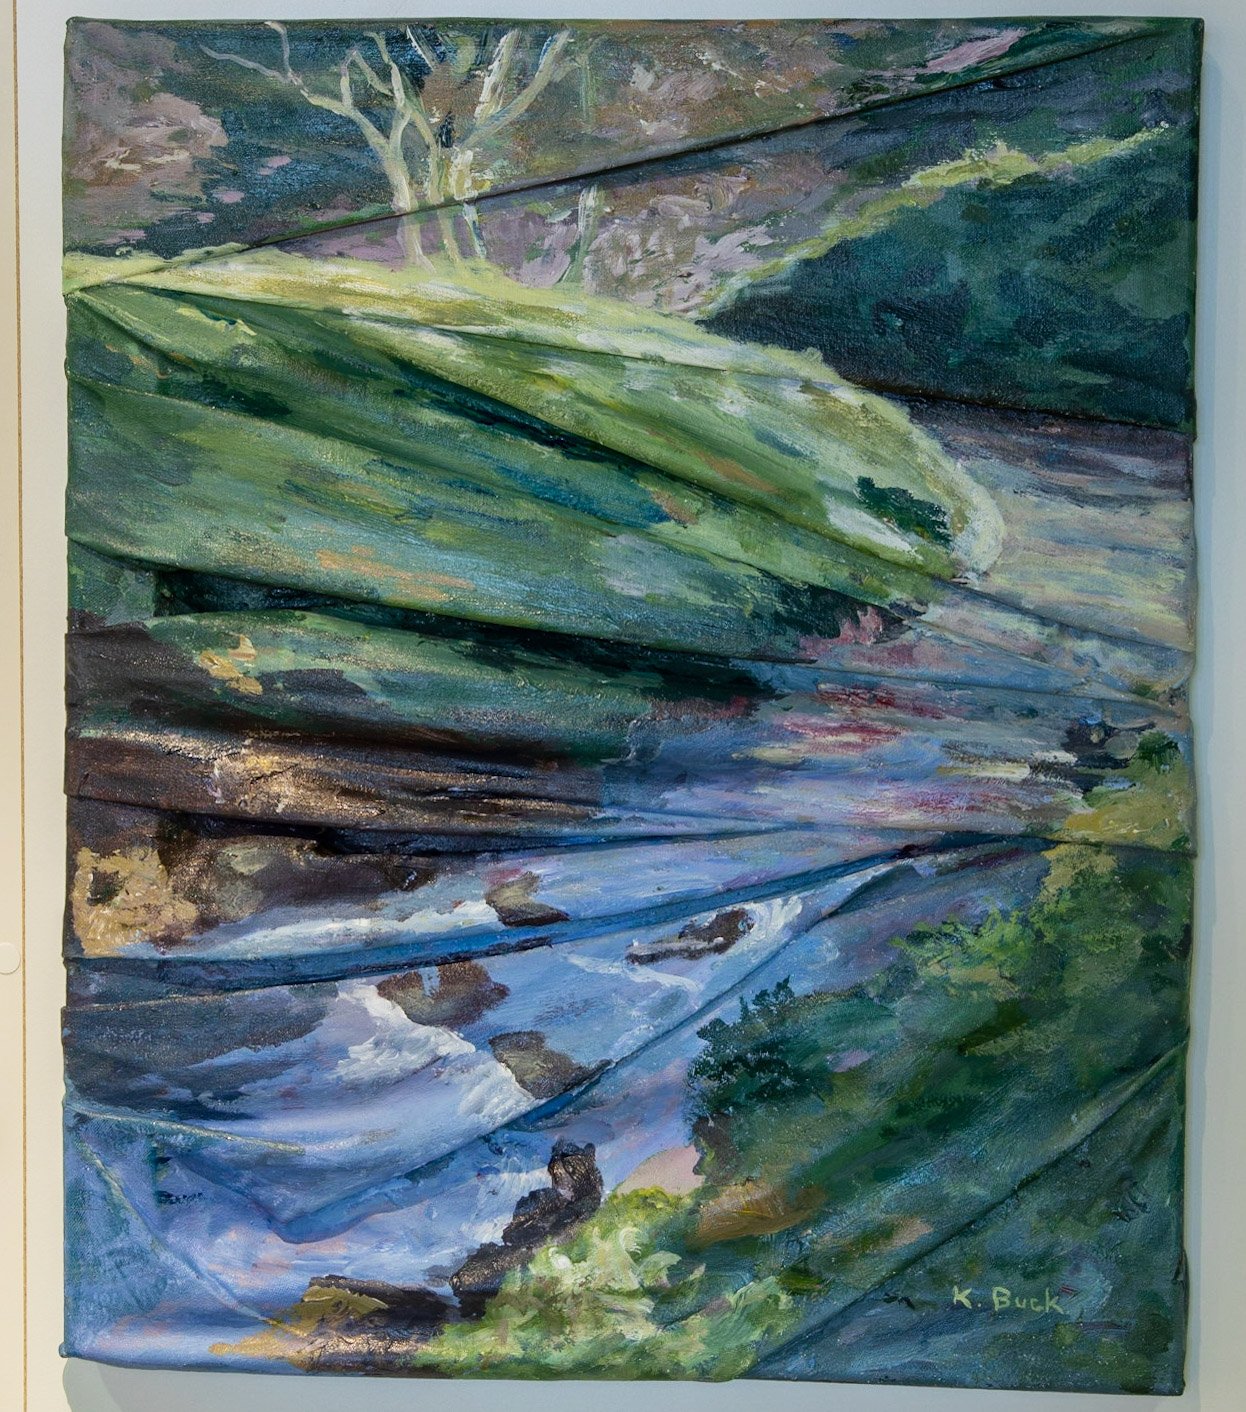 Kathleen Buck, "Layered Landscape"